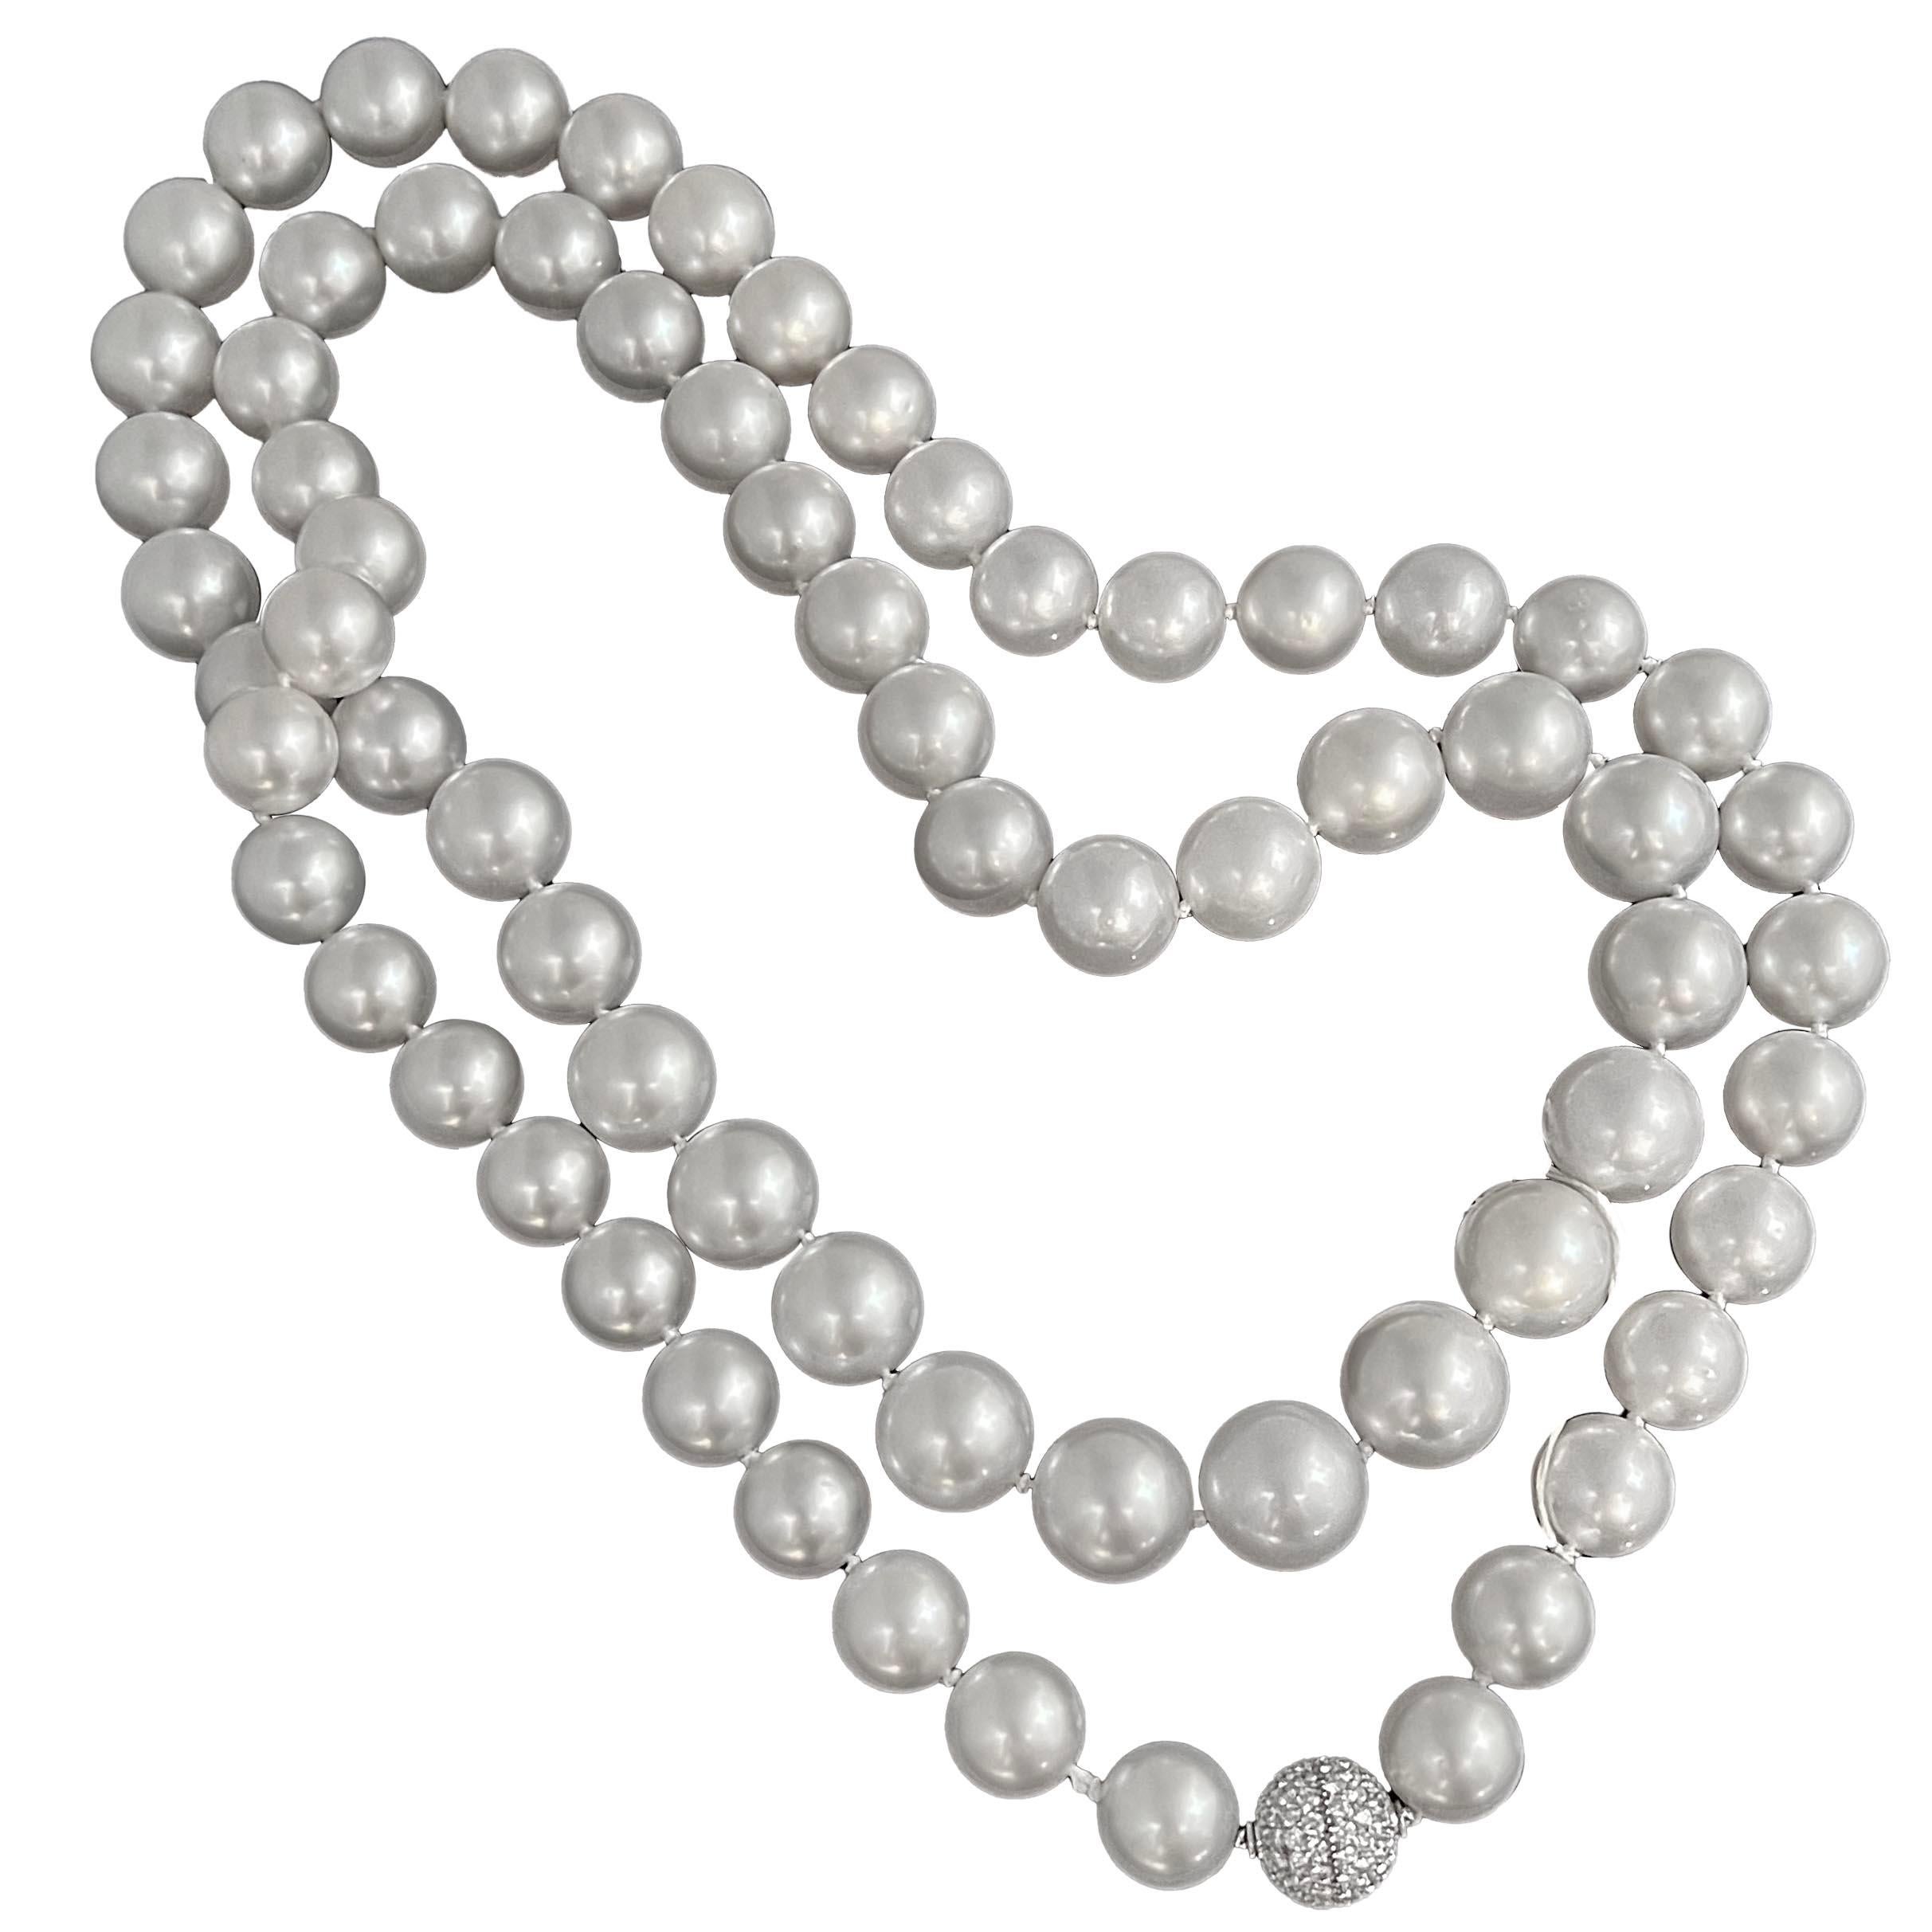 Retro Large South Sea Pearl Necklace With Platinum Diamond Clasp